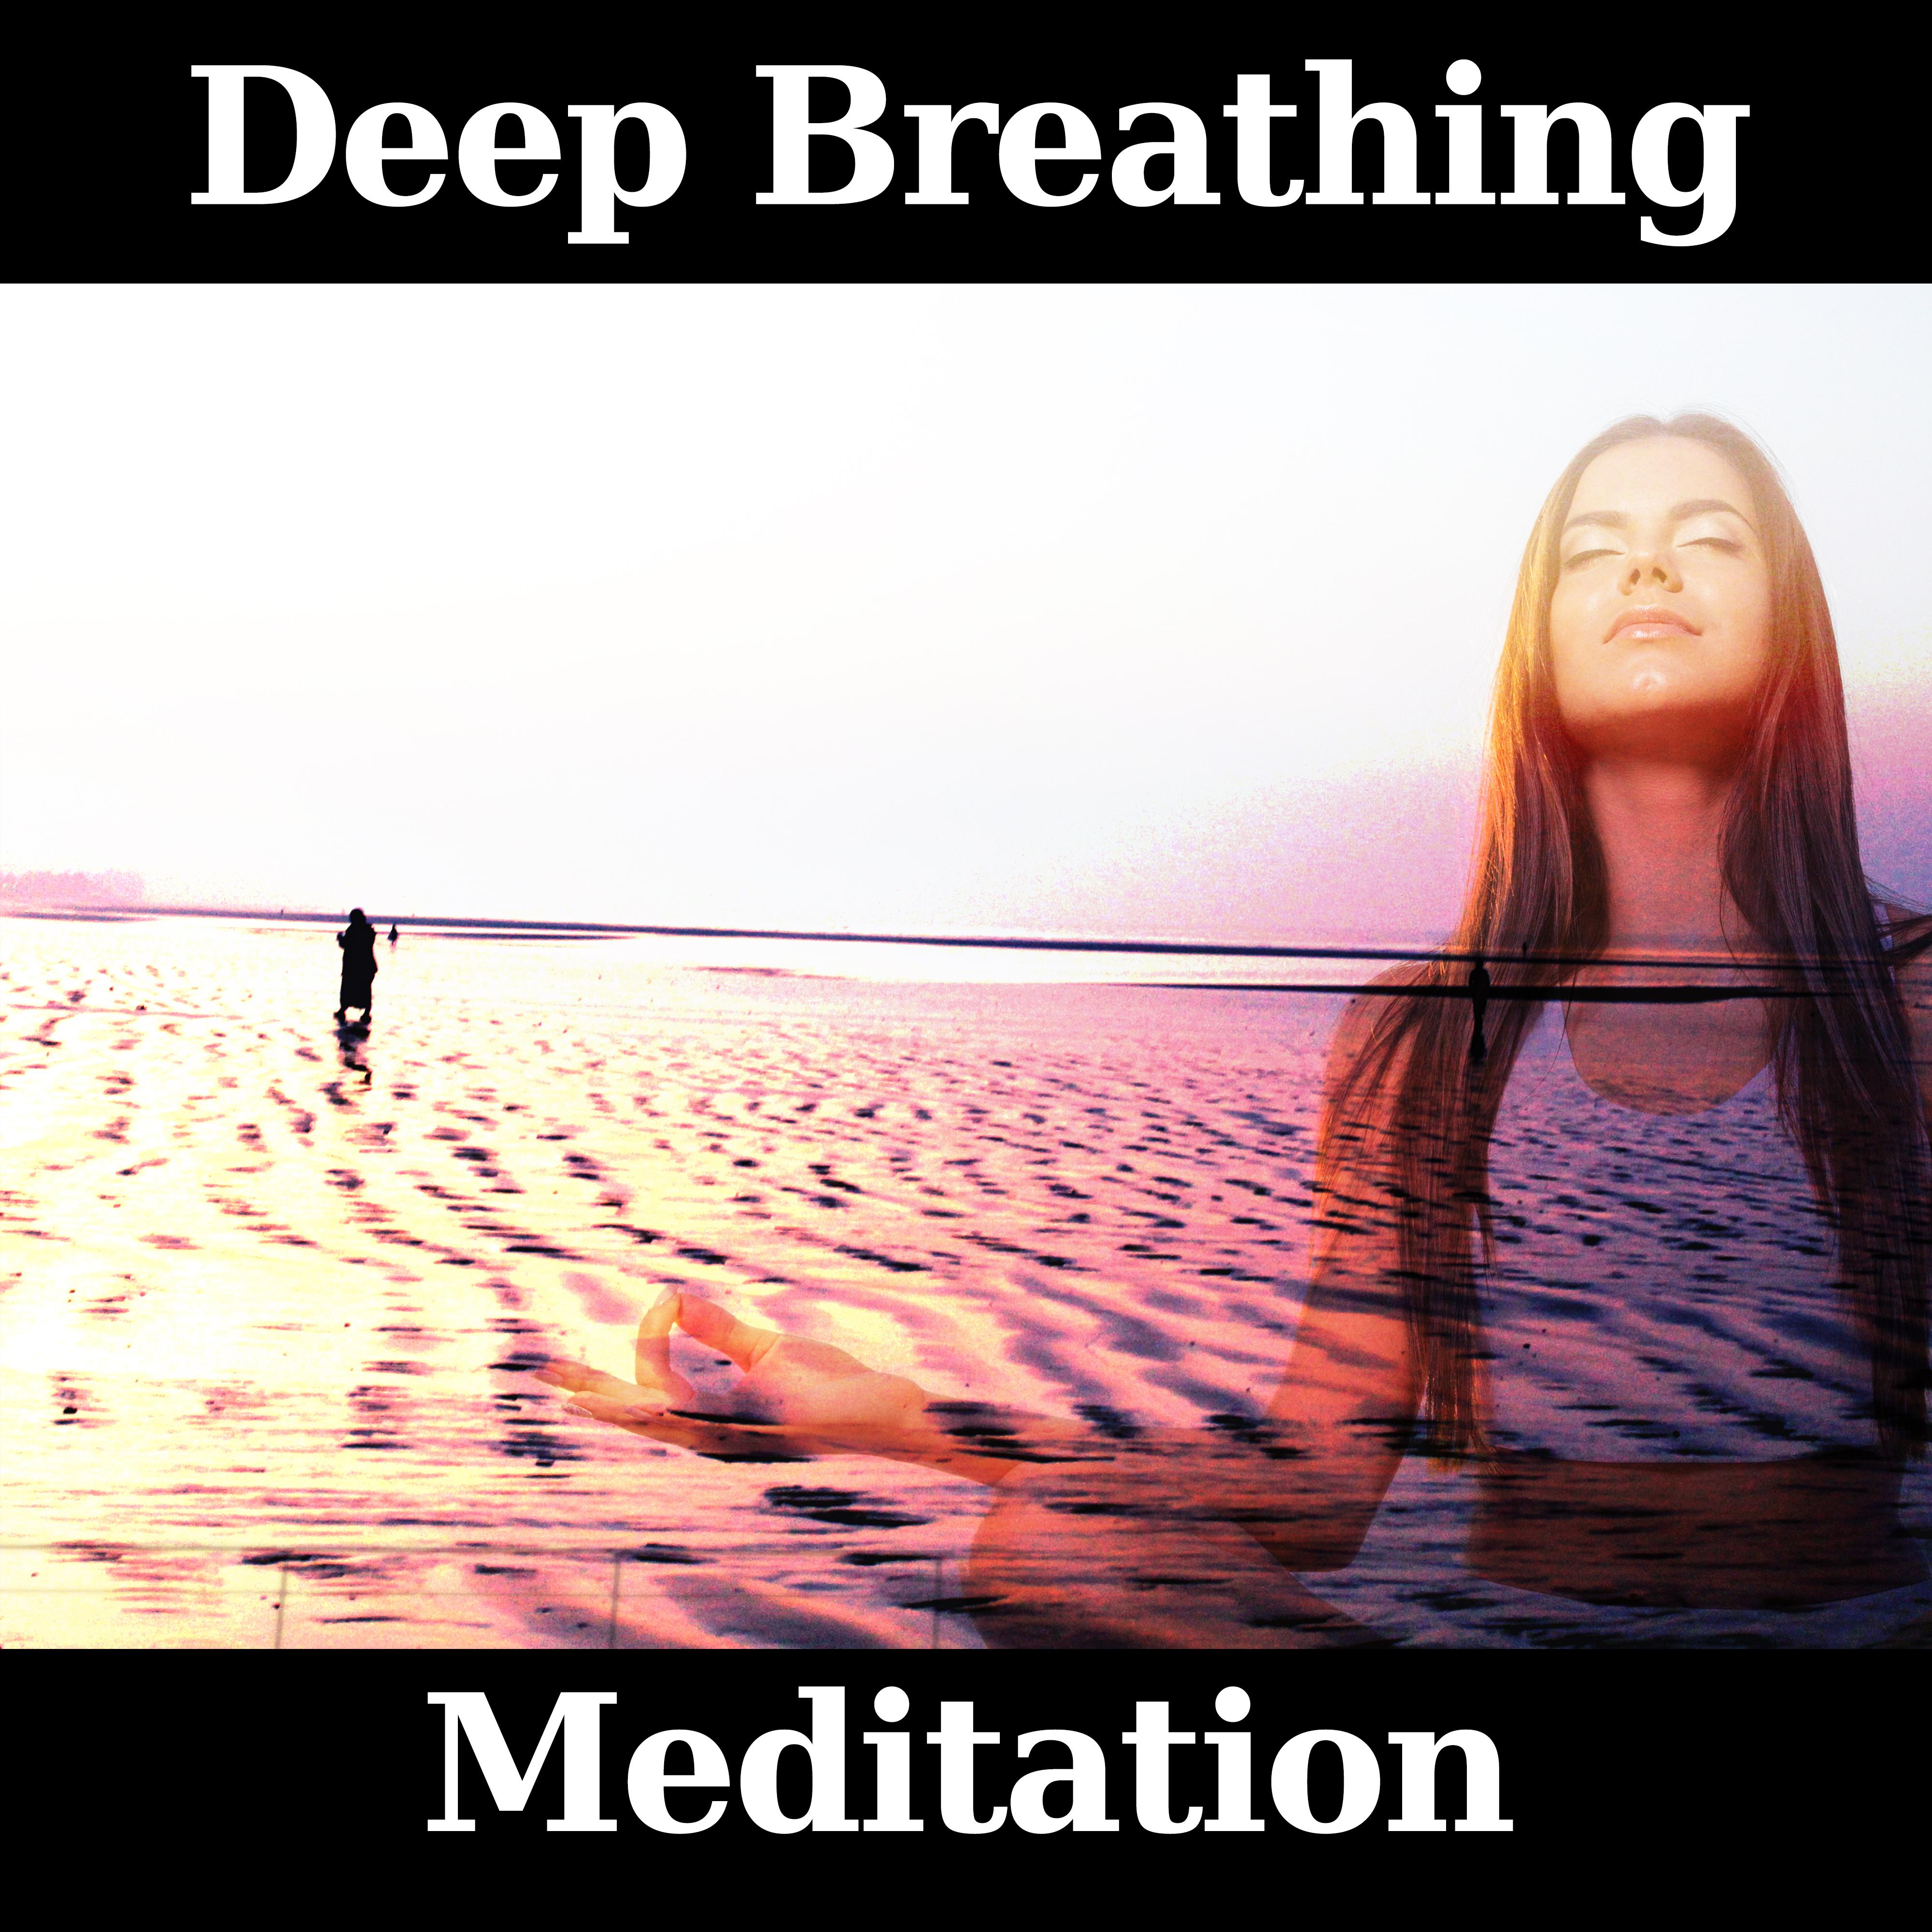 Deep Breathing Meditation  Best Music for Yoga Meditation, Calm Down  Rest, Spirit of Zen, New Age